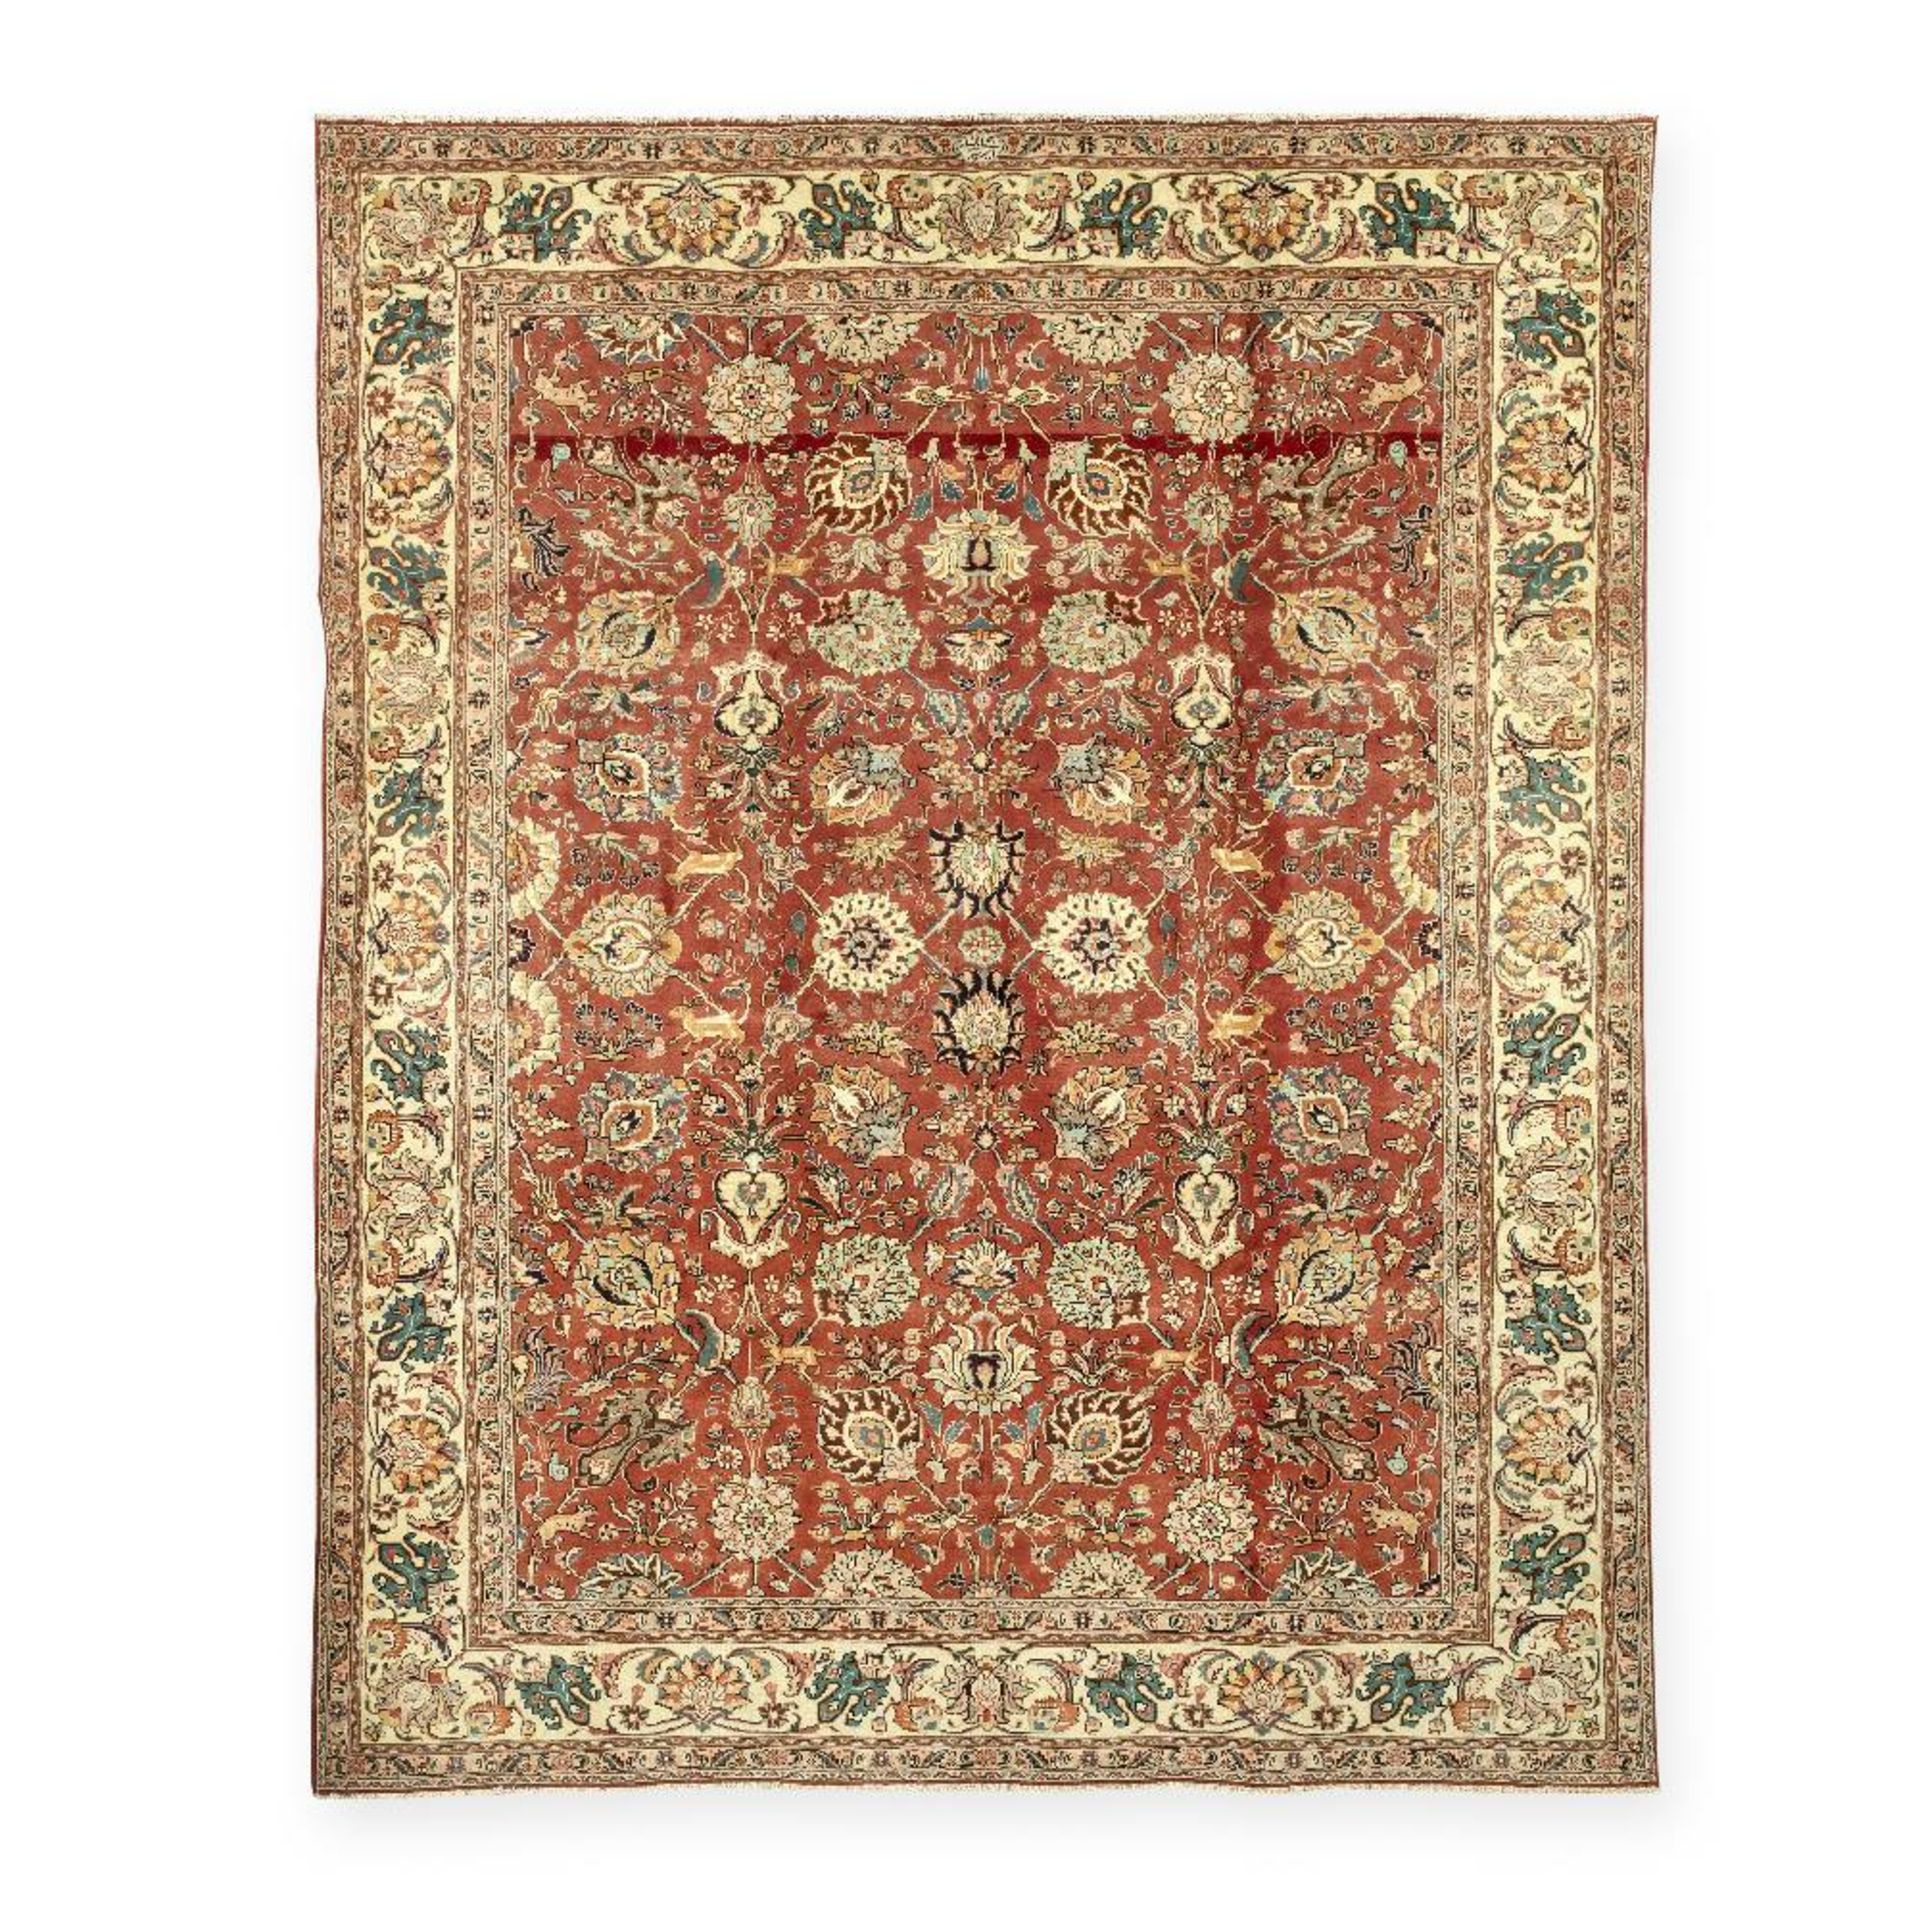 A Tabriz carpet signed Javan Amirkhiz, North-West Persia, 372cm x 298cm approximately